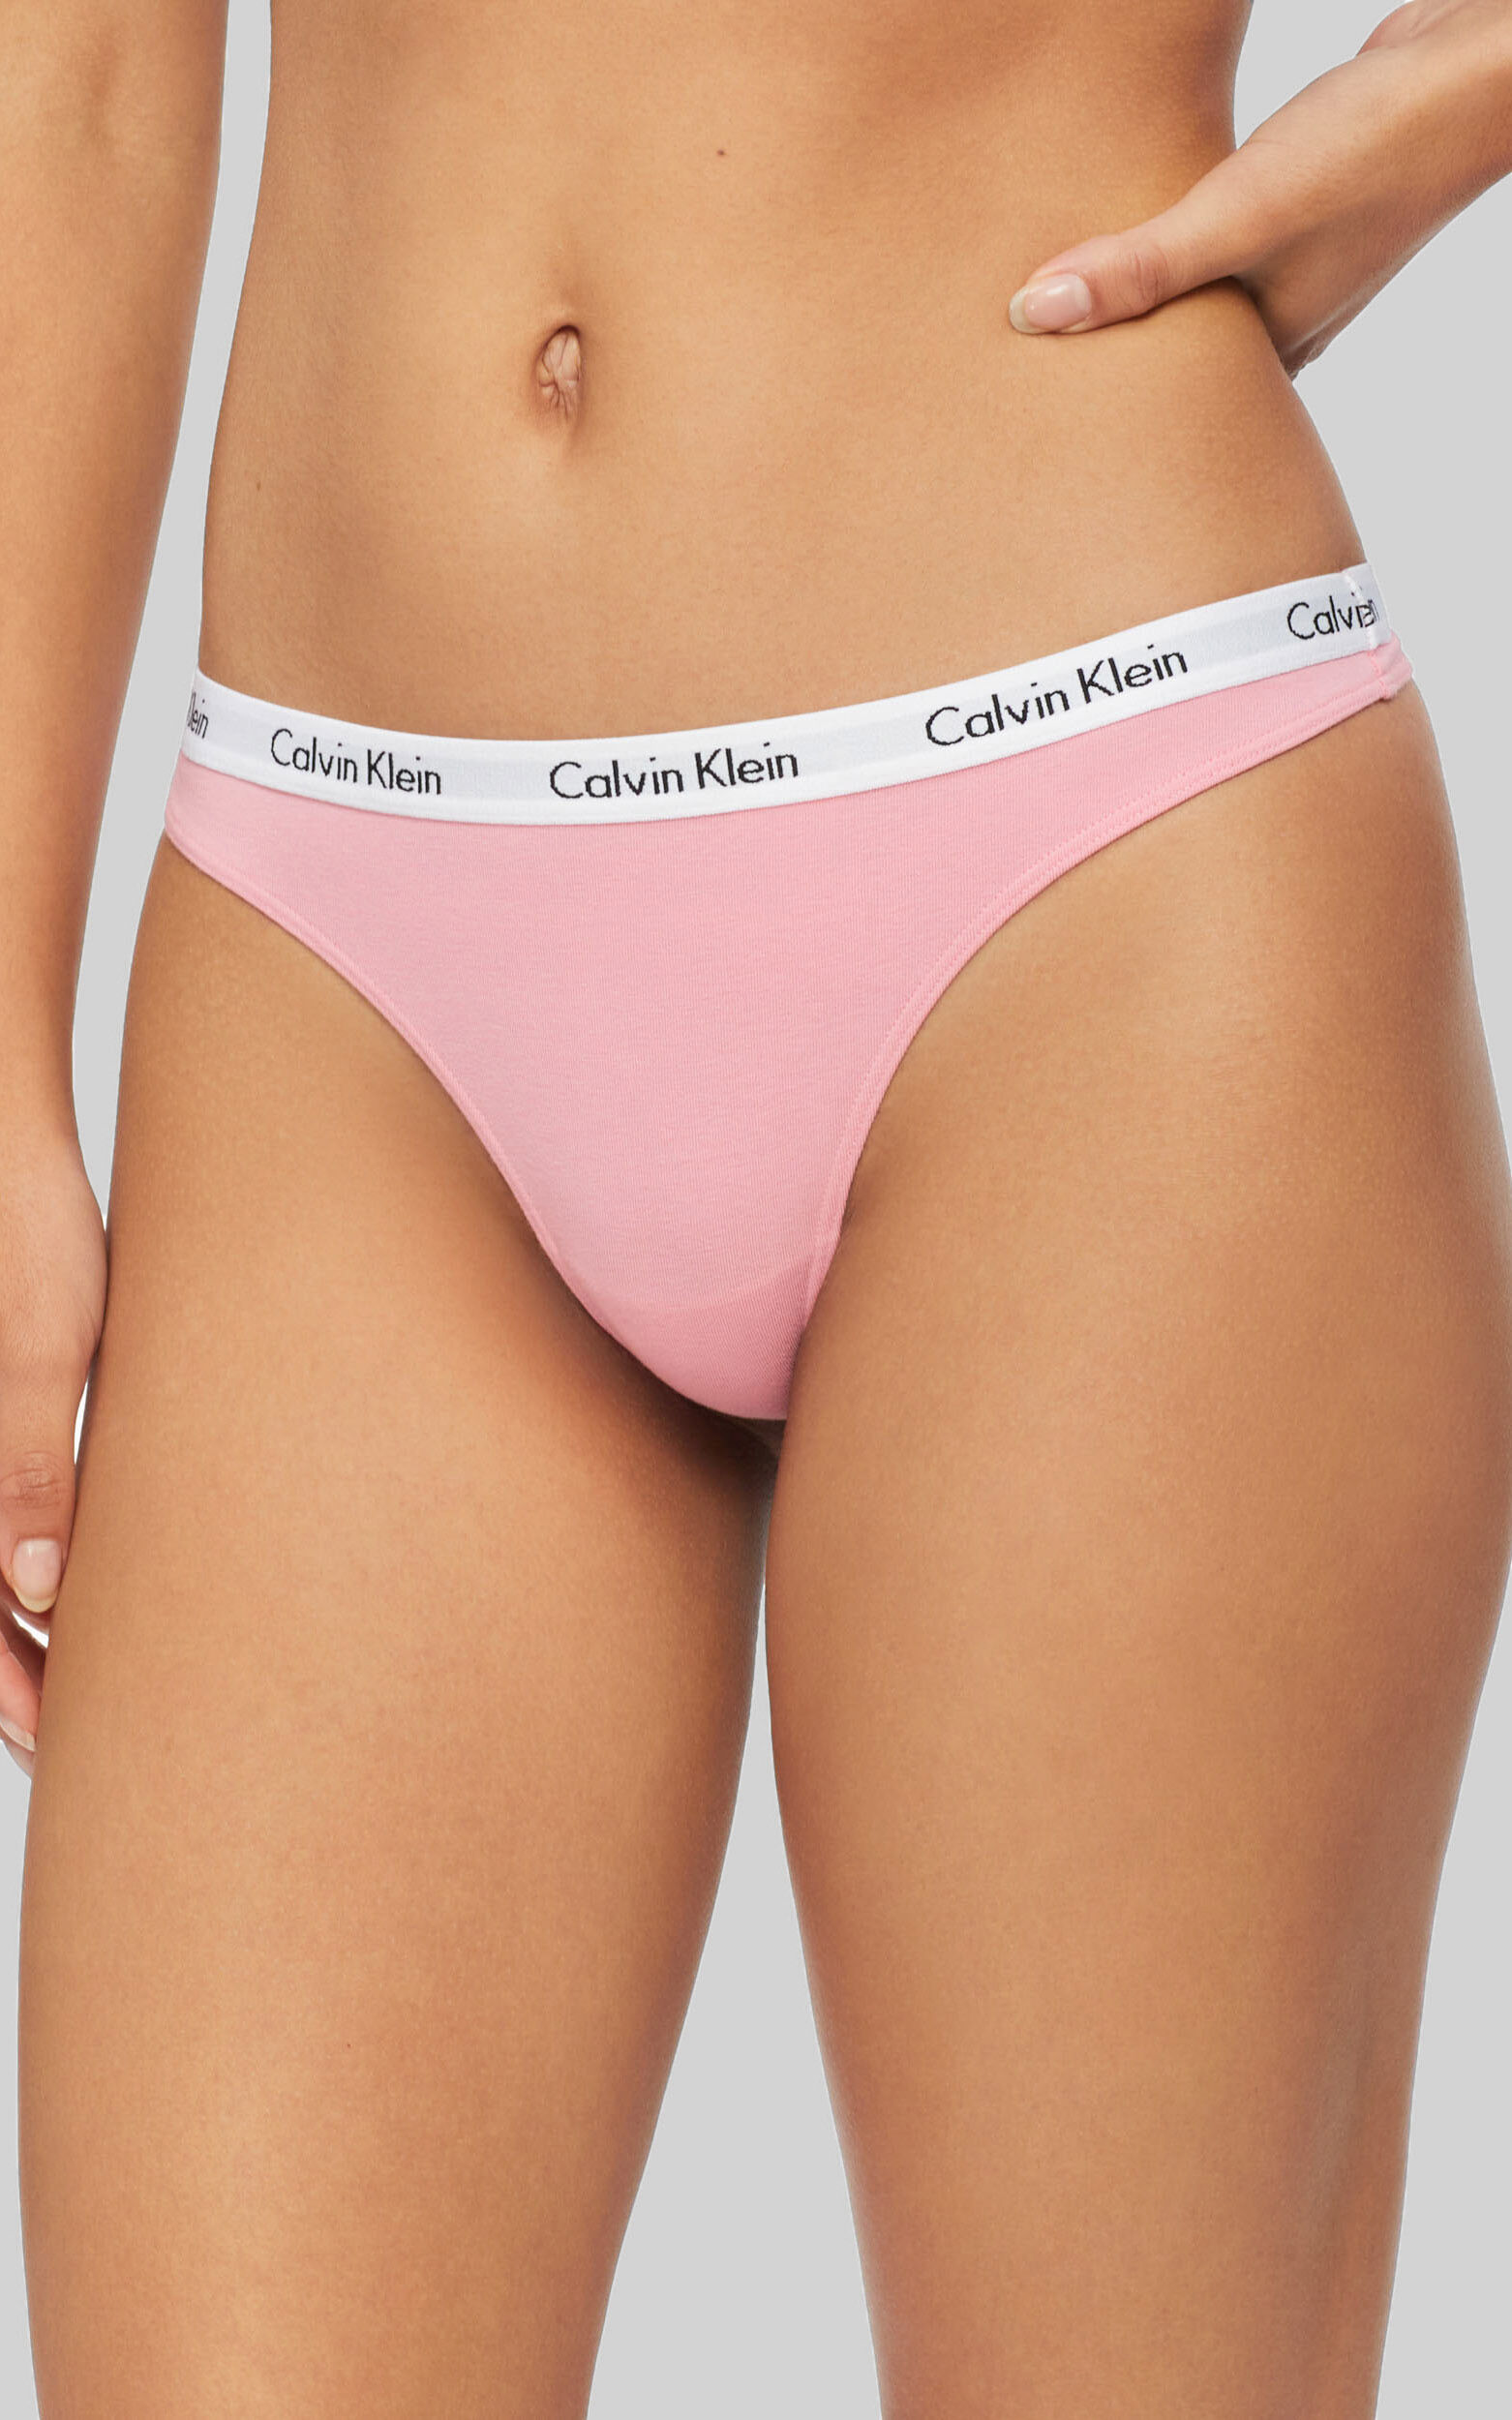 Calvin Klein - Pride Carousel Thong 5 pack in Multi Pack - L, MLT1, super-hi-res image number null